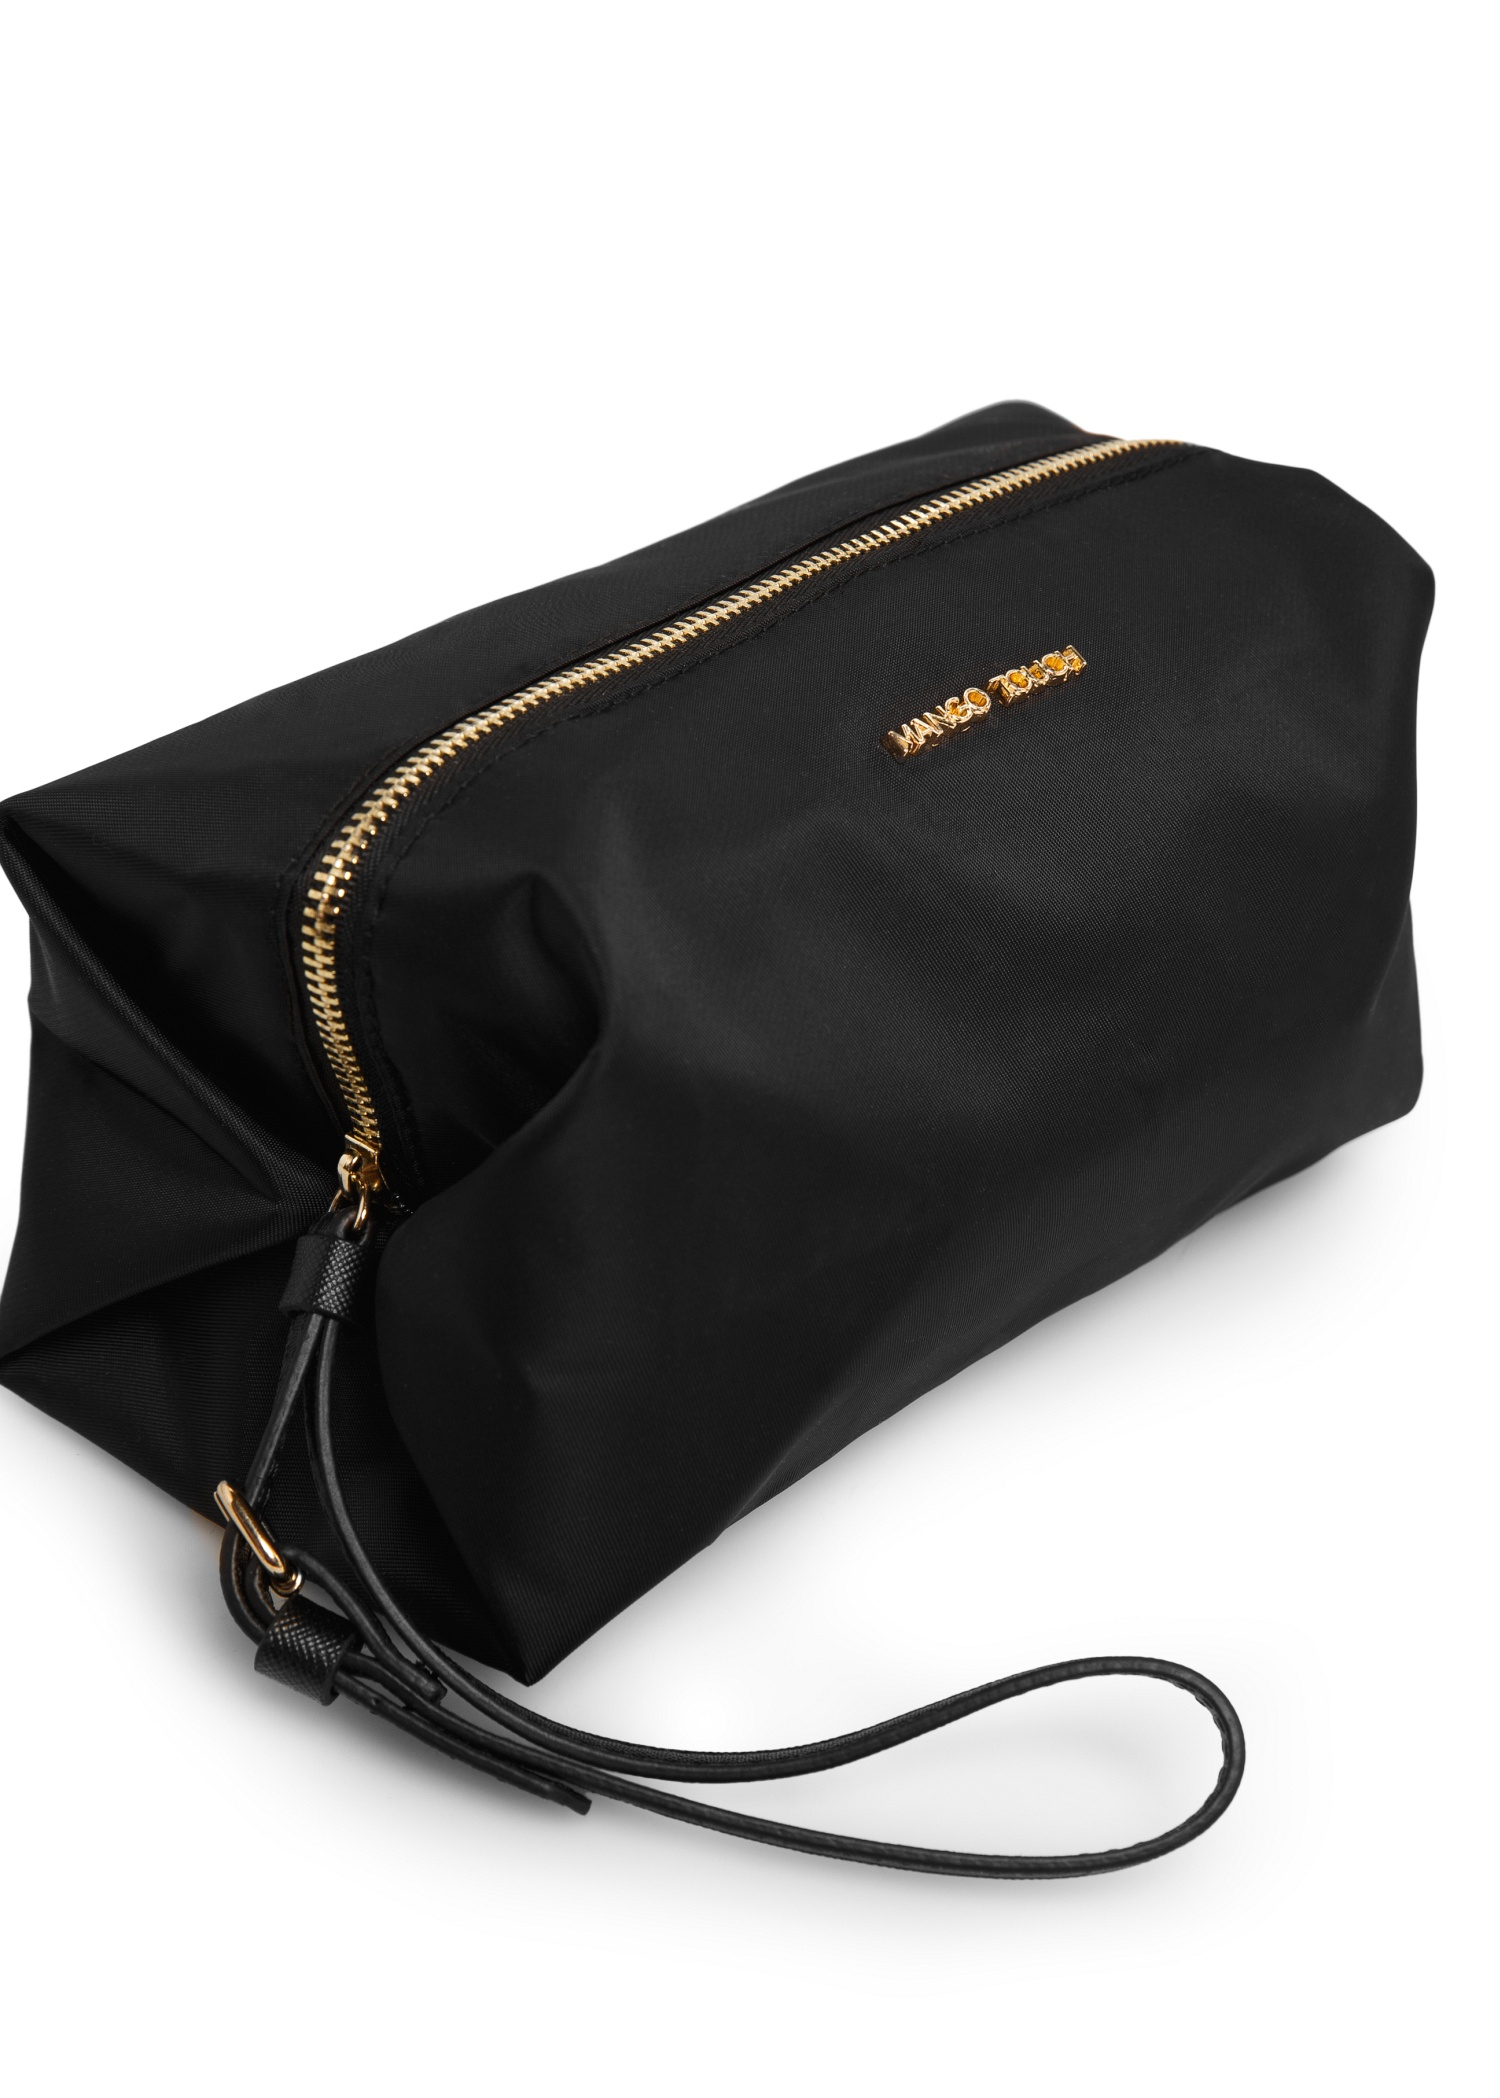 Mango Nylon Cosmetic Bag in Black | Lyst